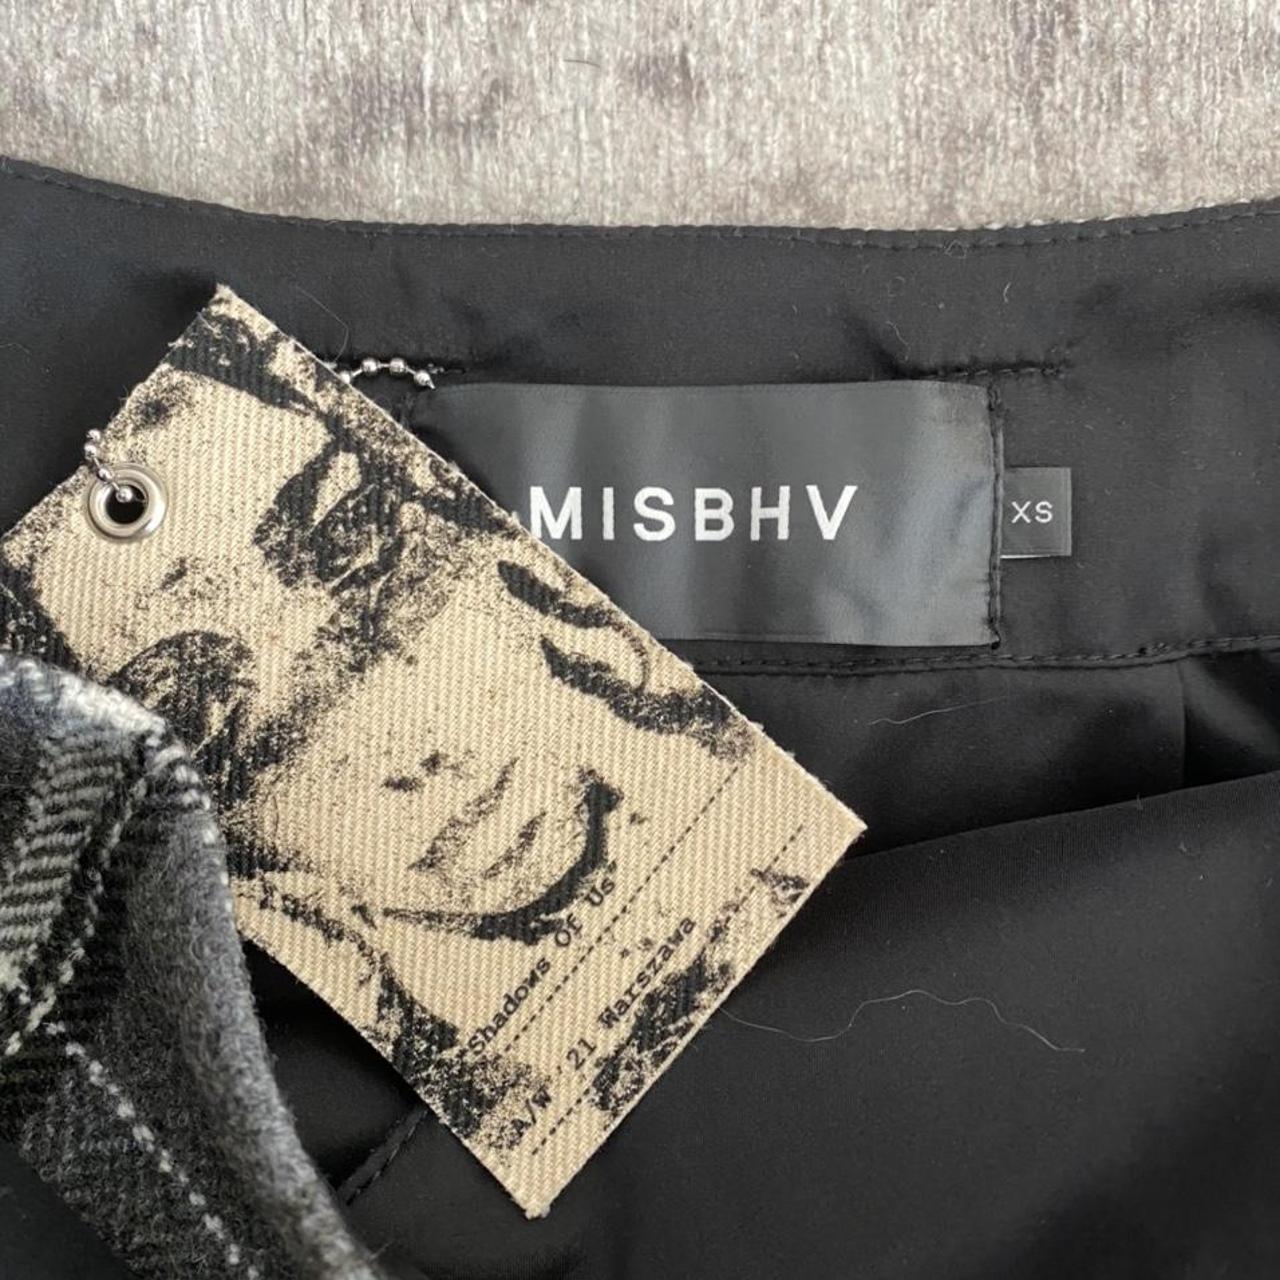 FLASH SALE till 10/30 MISBHV Miniskirt New with tag... - Depop